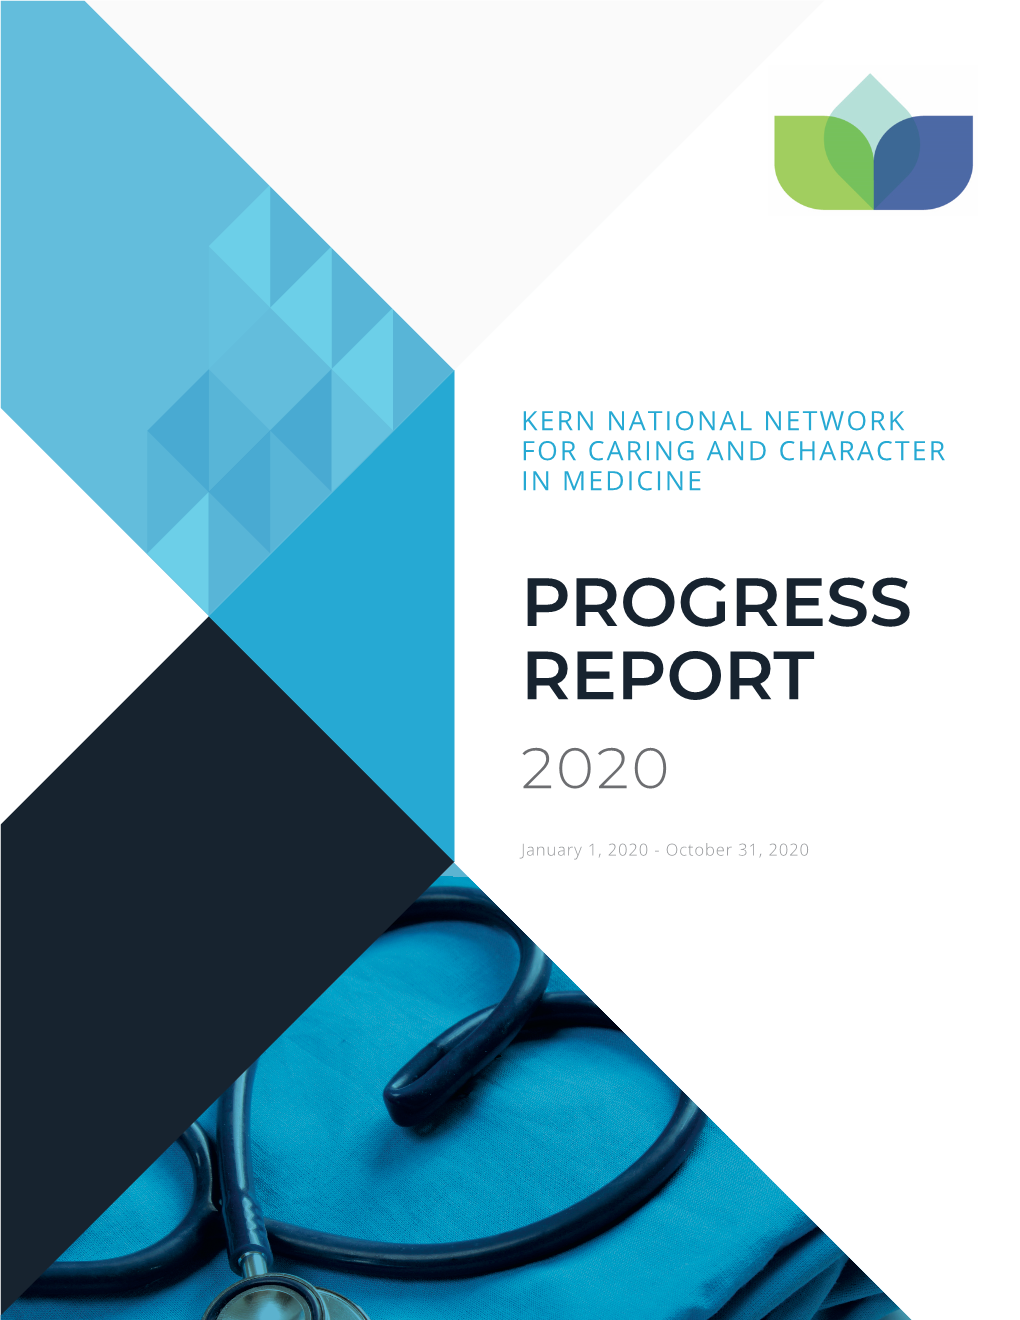 Progress Report 2020